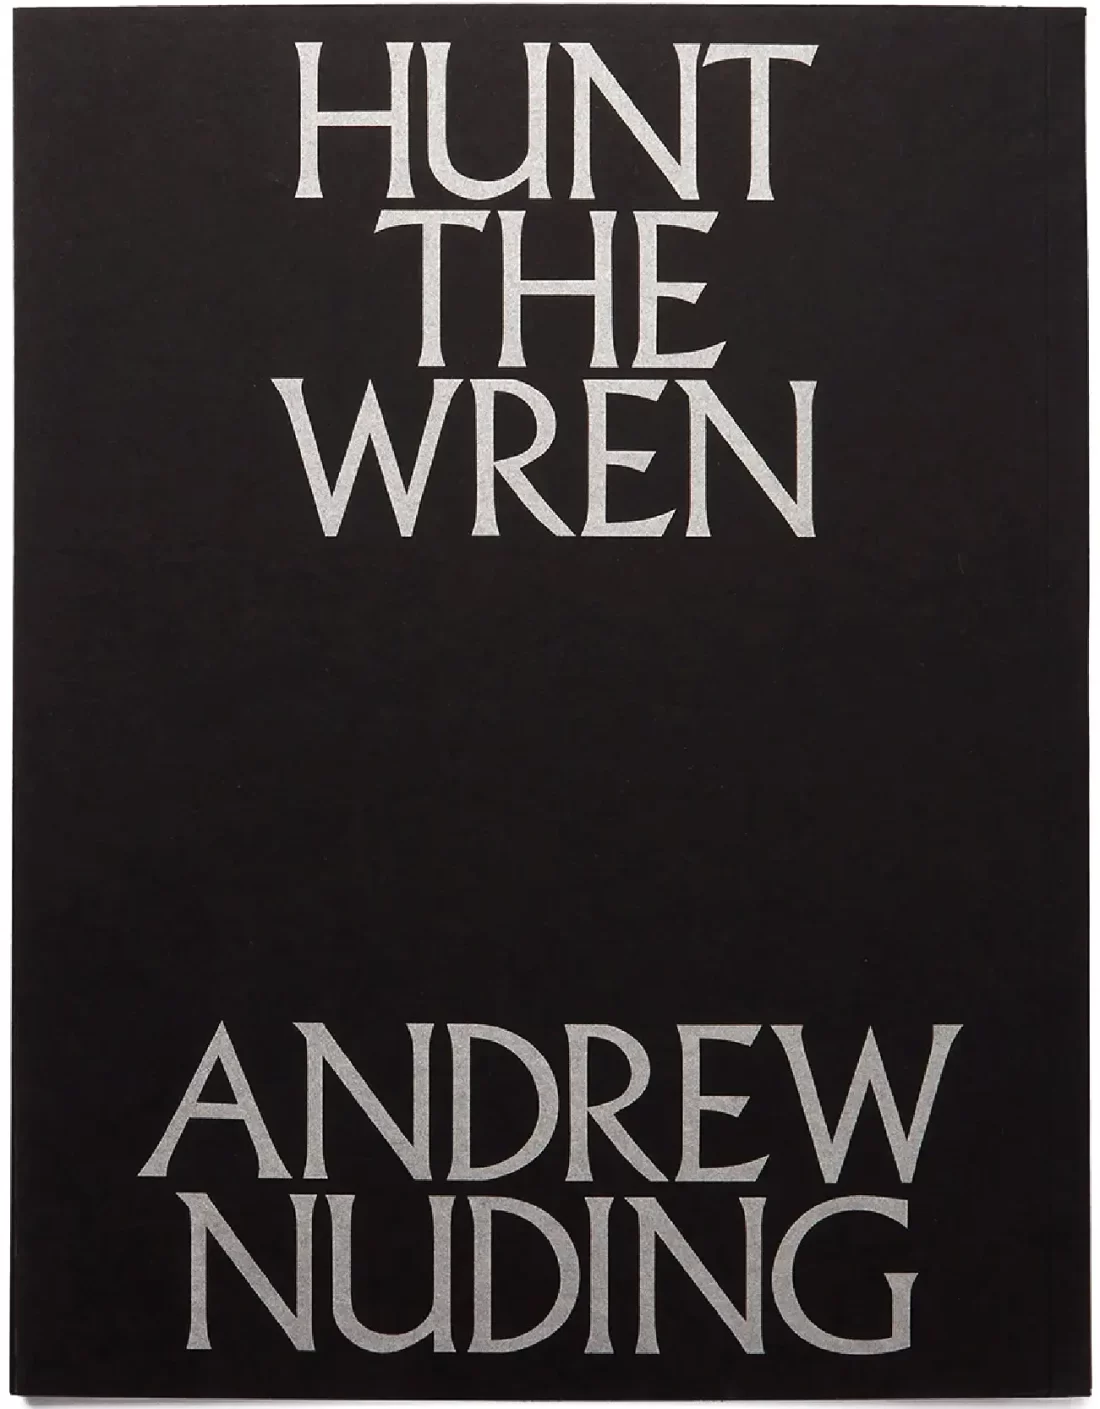 Andrew Nuding's Hunt the Wren